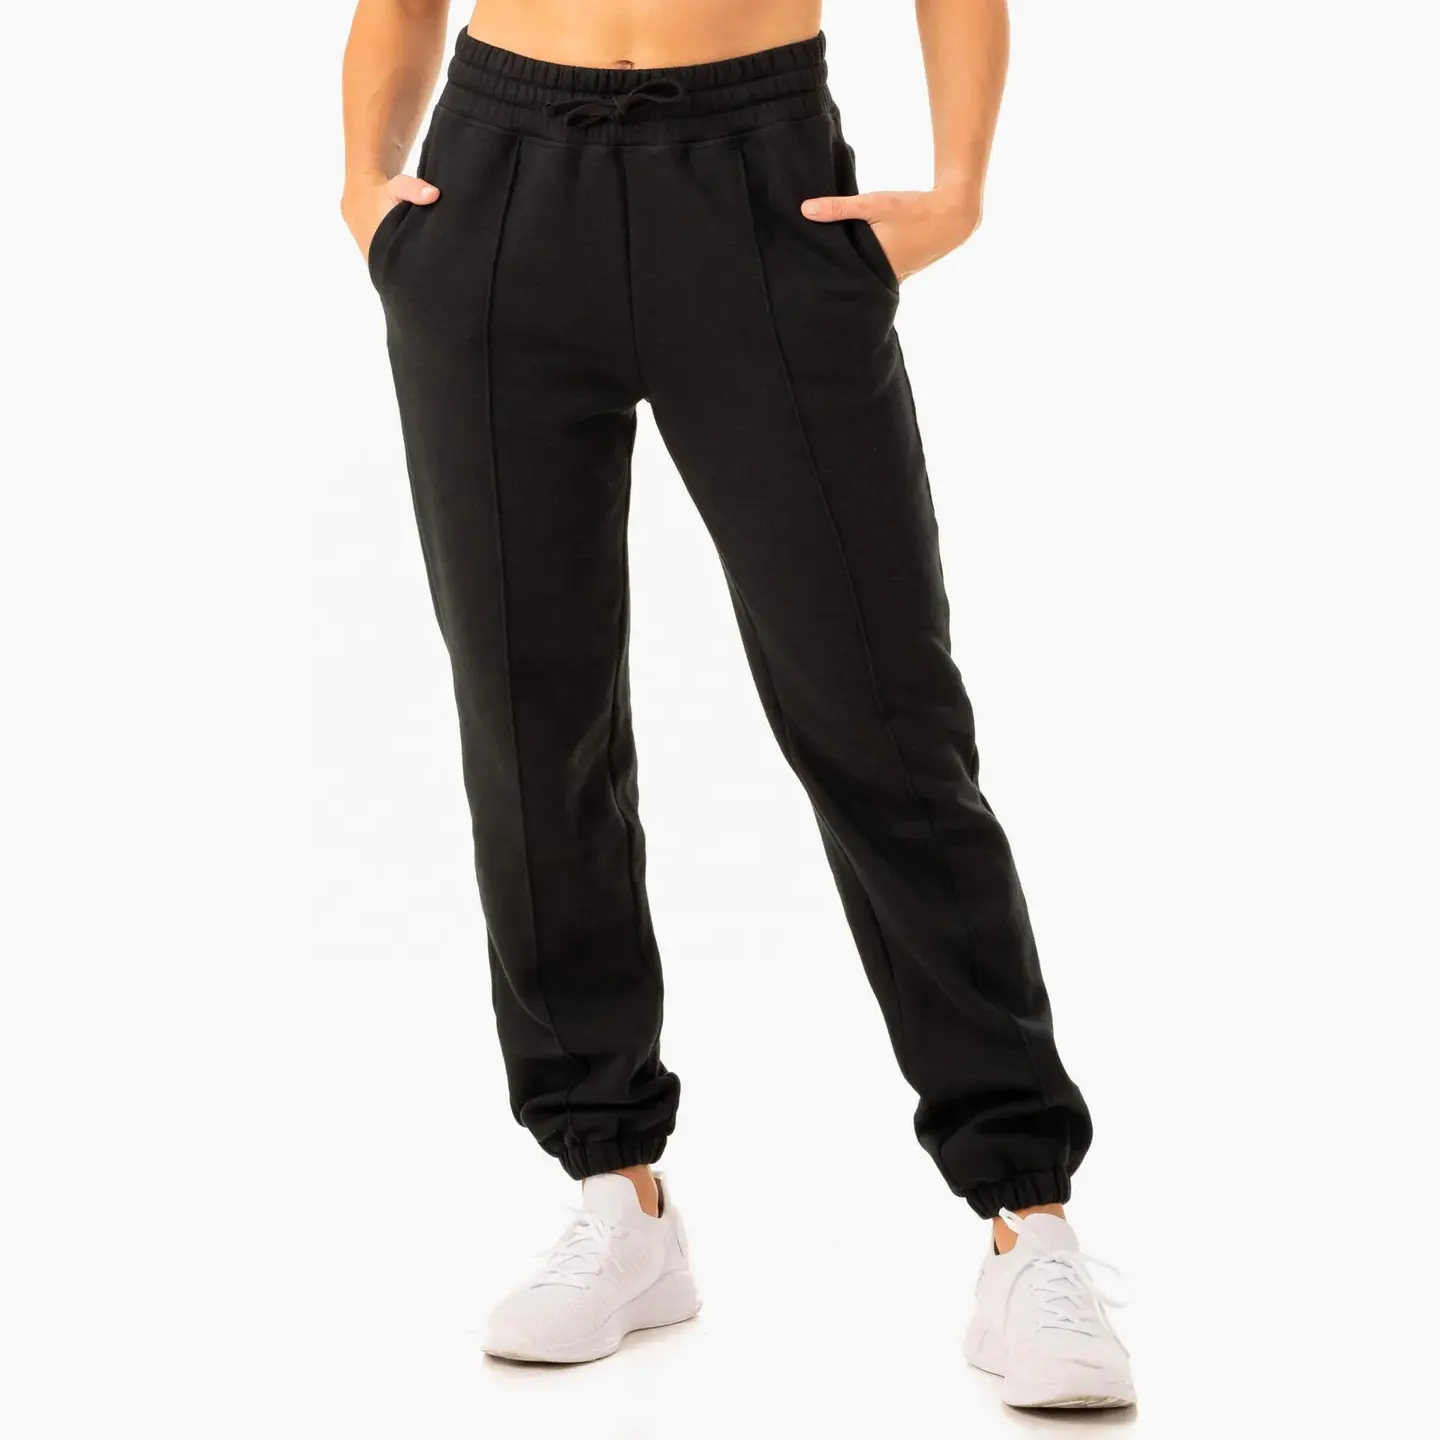 Produk baru celana wanita pinggang tinggi kustom celana atletik gym celana JOGGER harian celana olahraga untuk wanita